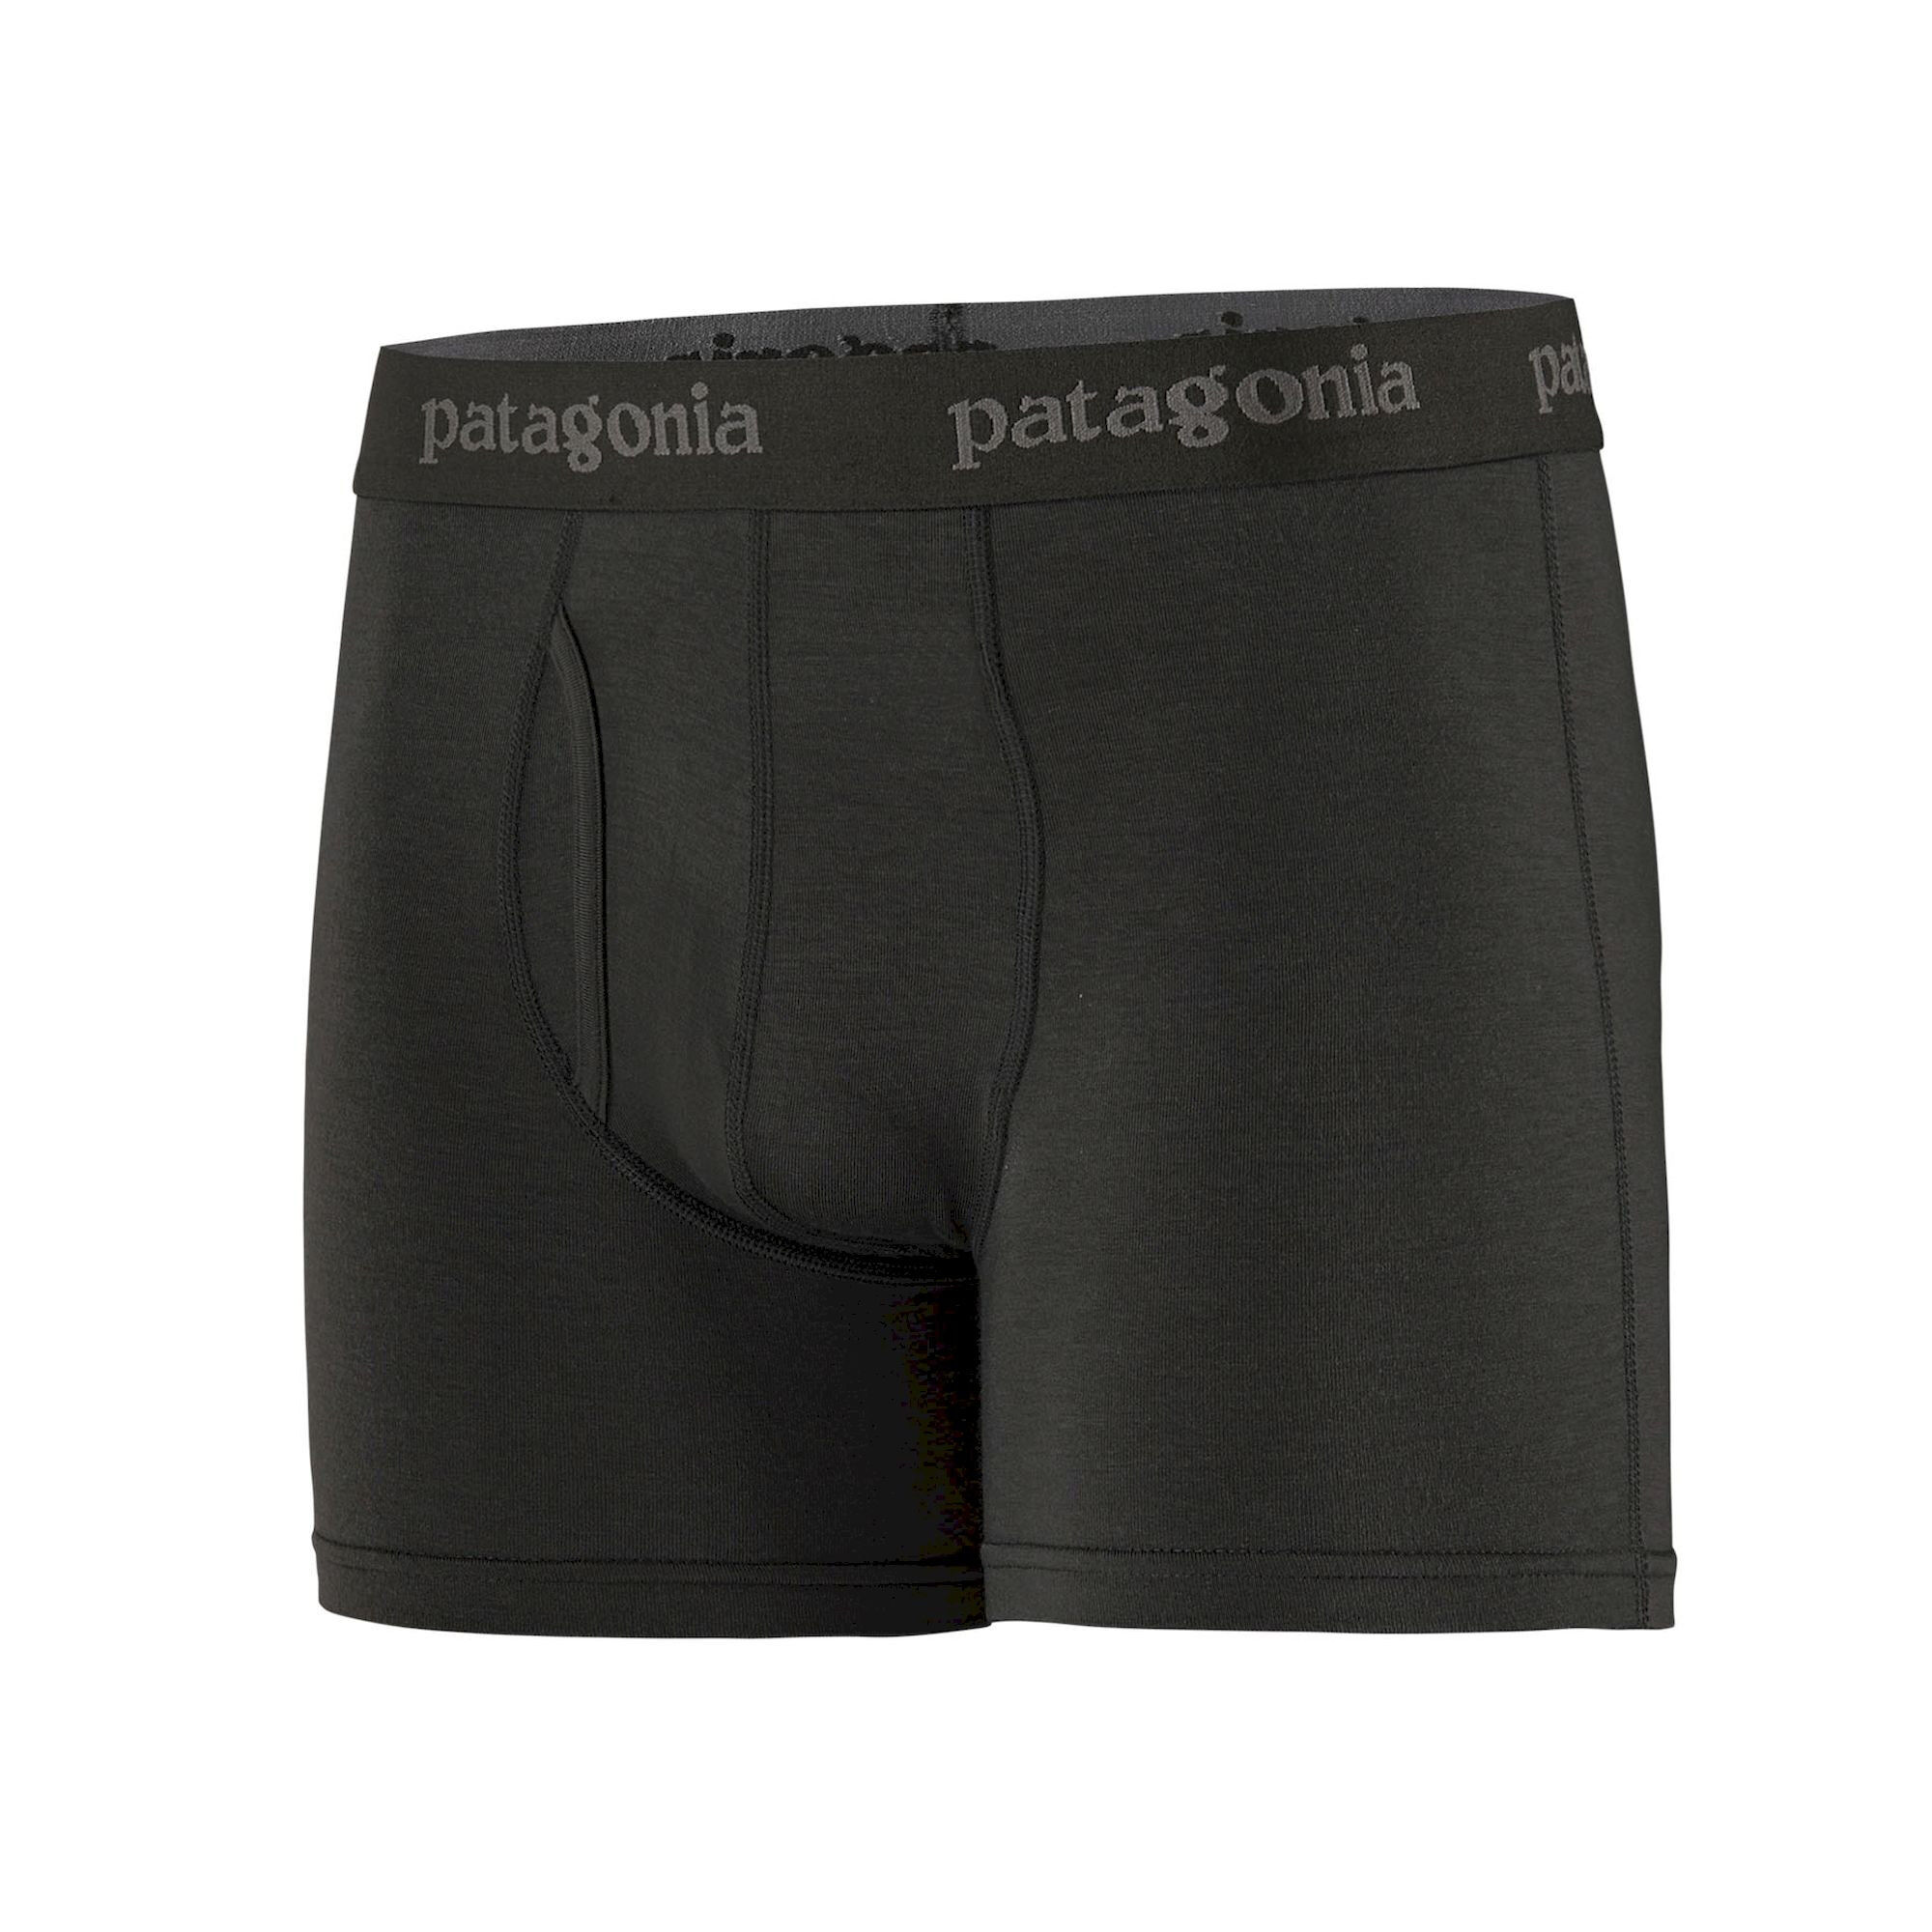 Patagonia - Essential Boxer Briefs - 3" - Maglietta intima - Uomo